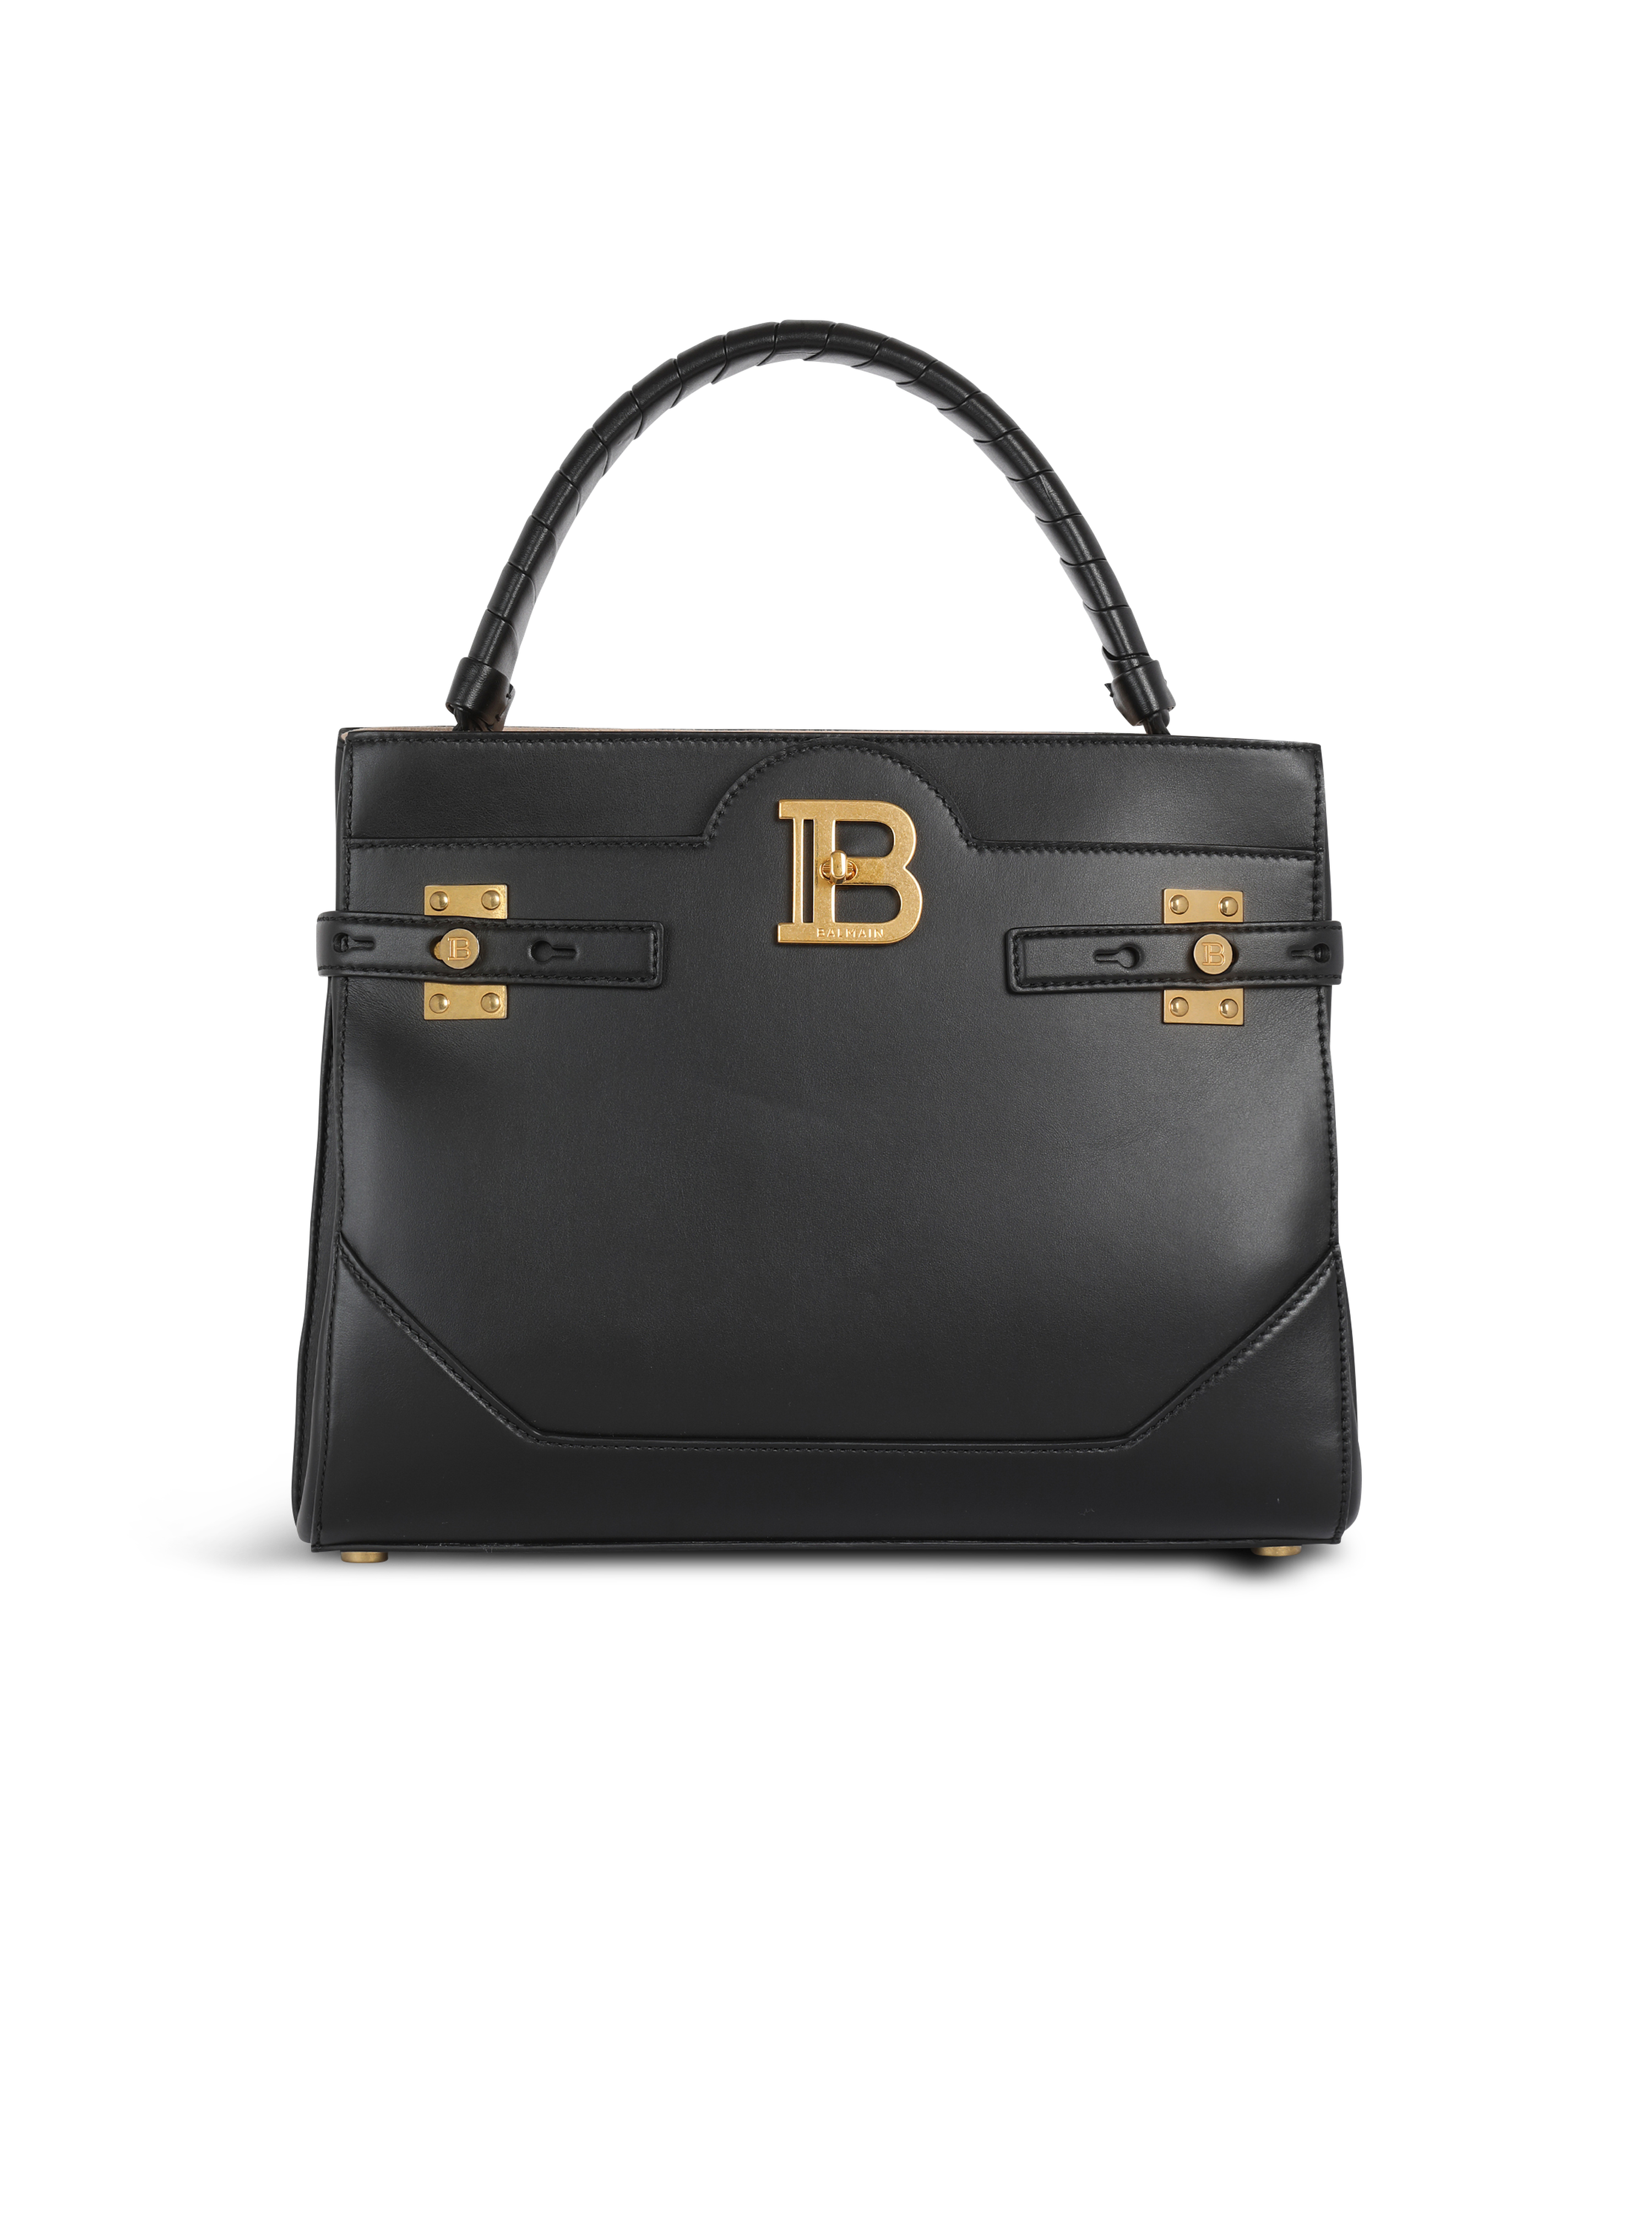 Leather B-Buzz Top Handle bag, black